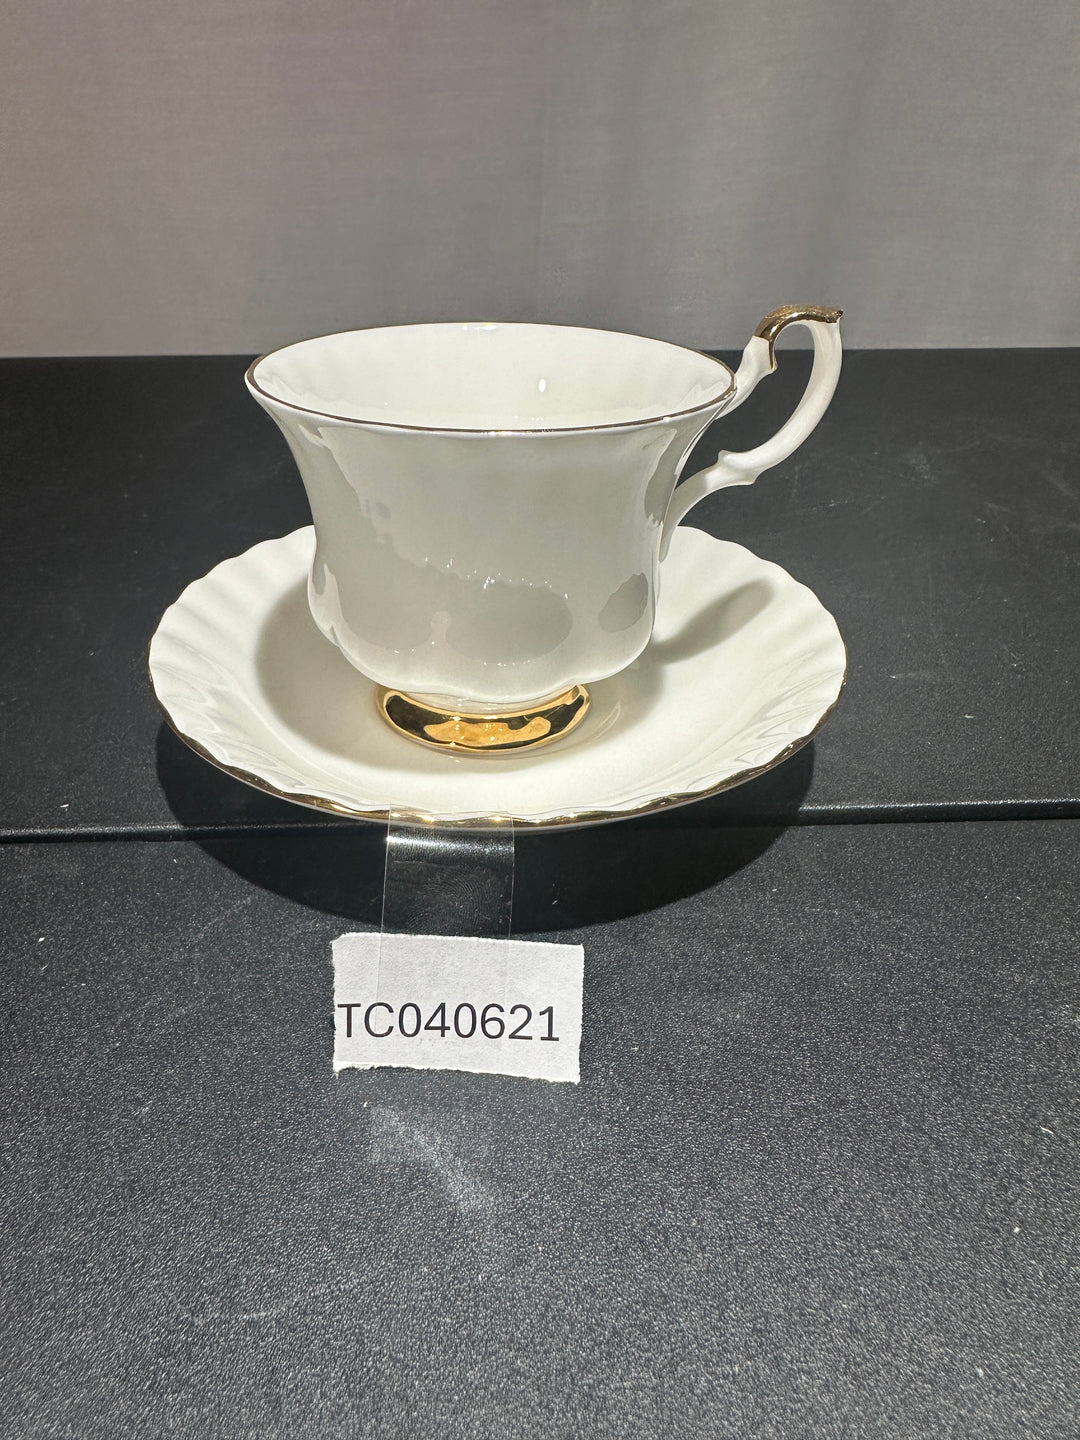 Tea Cup TC040621